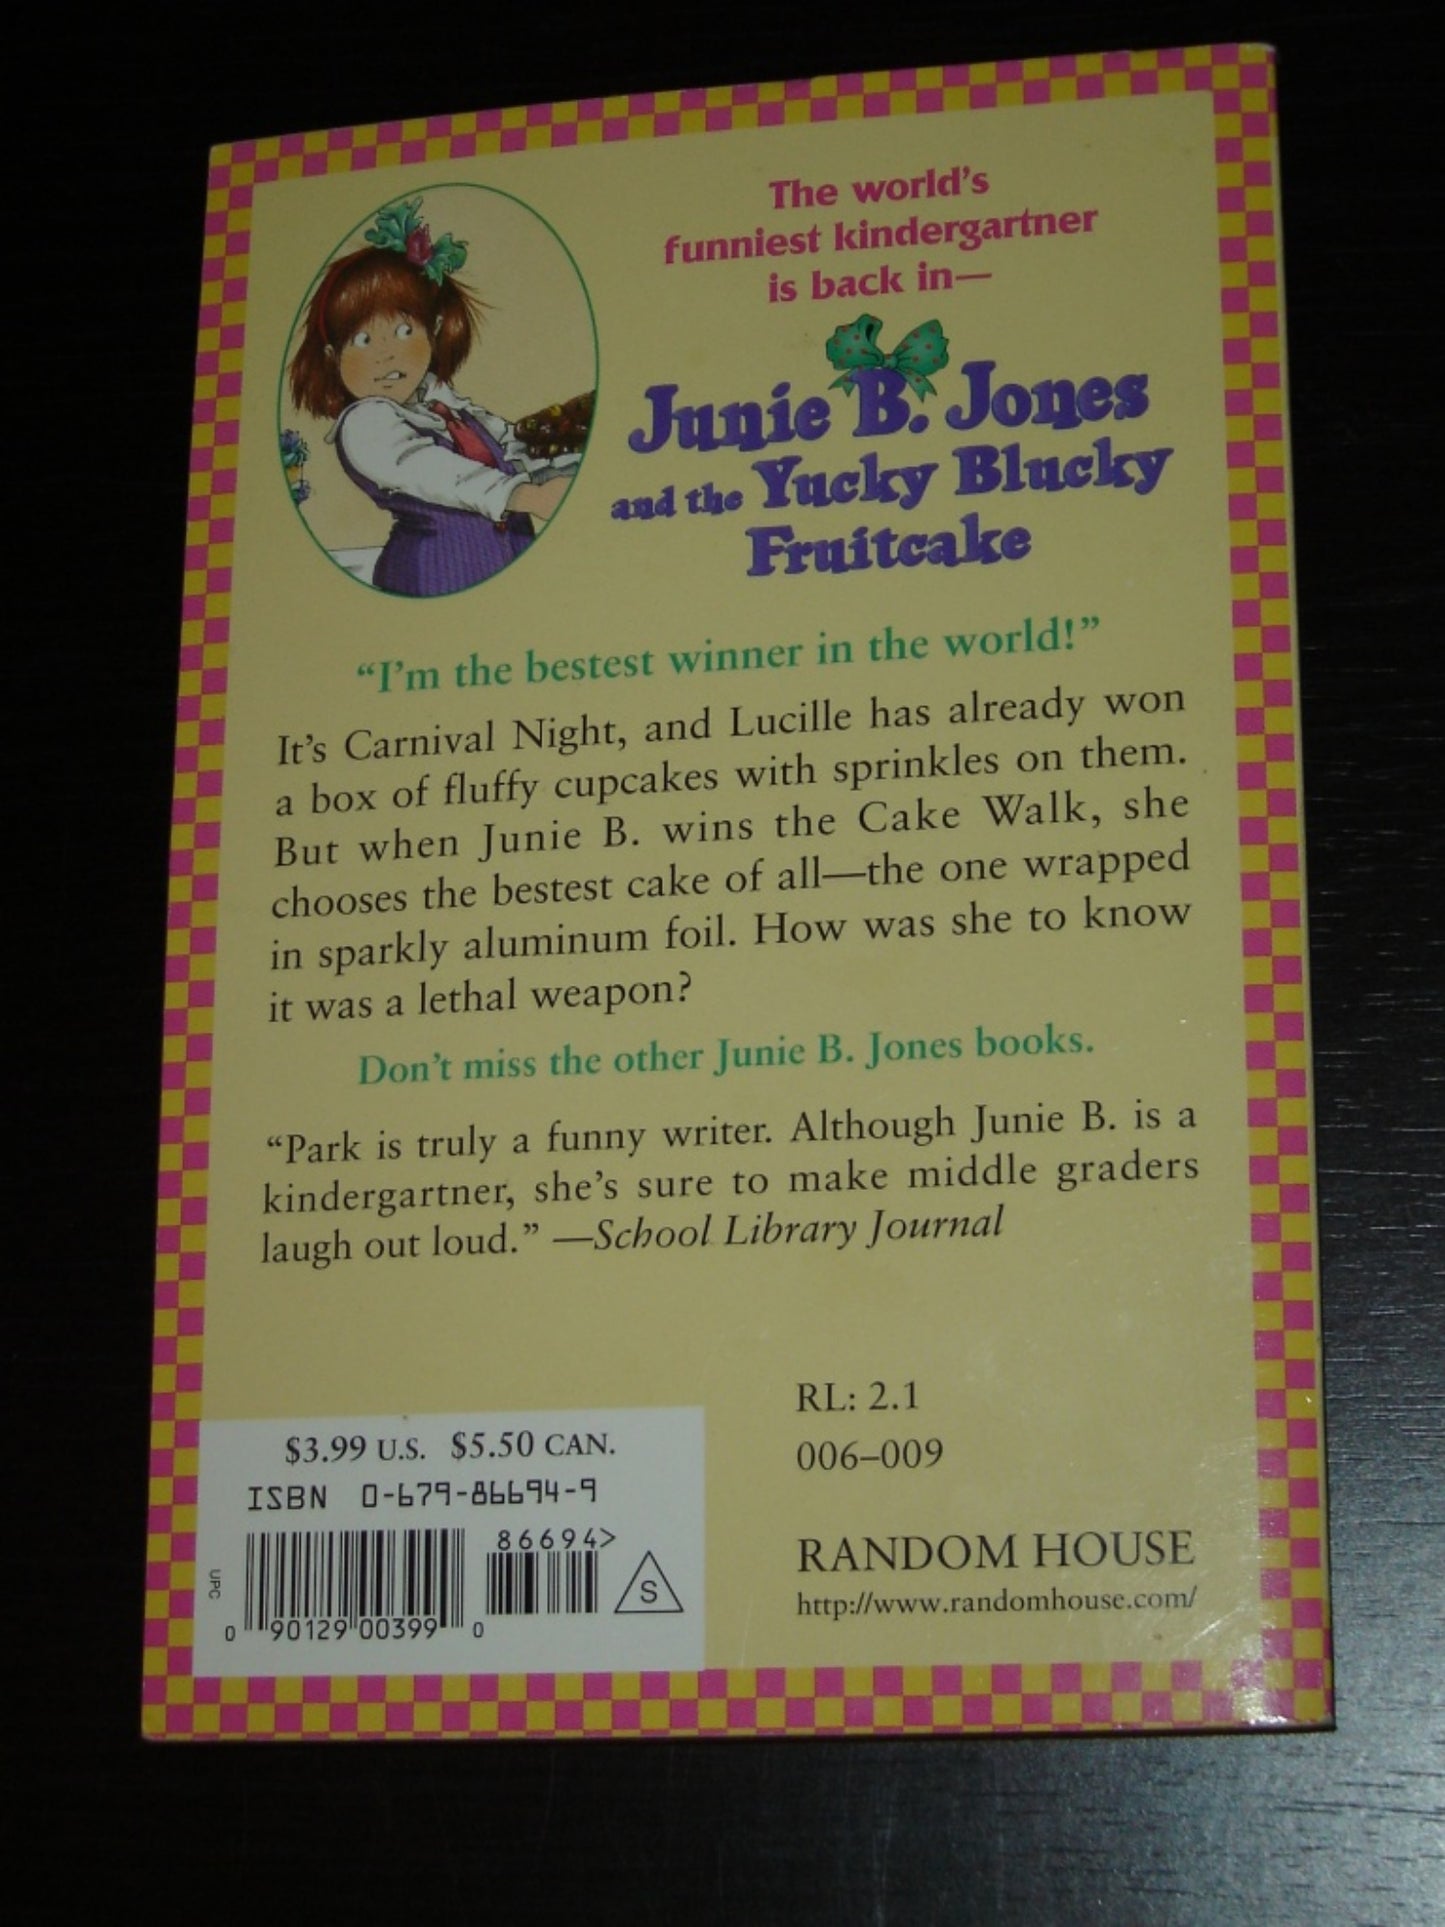 Junie B. Jones and the Yucky Blucky Fruitcake by Barbara Park near mint condition